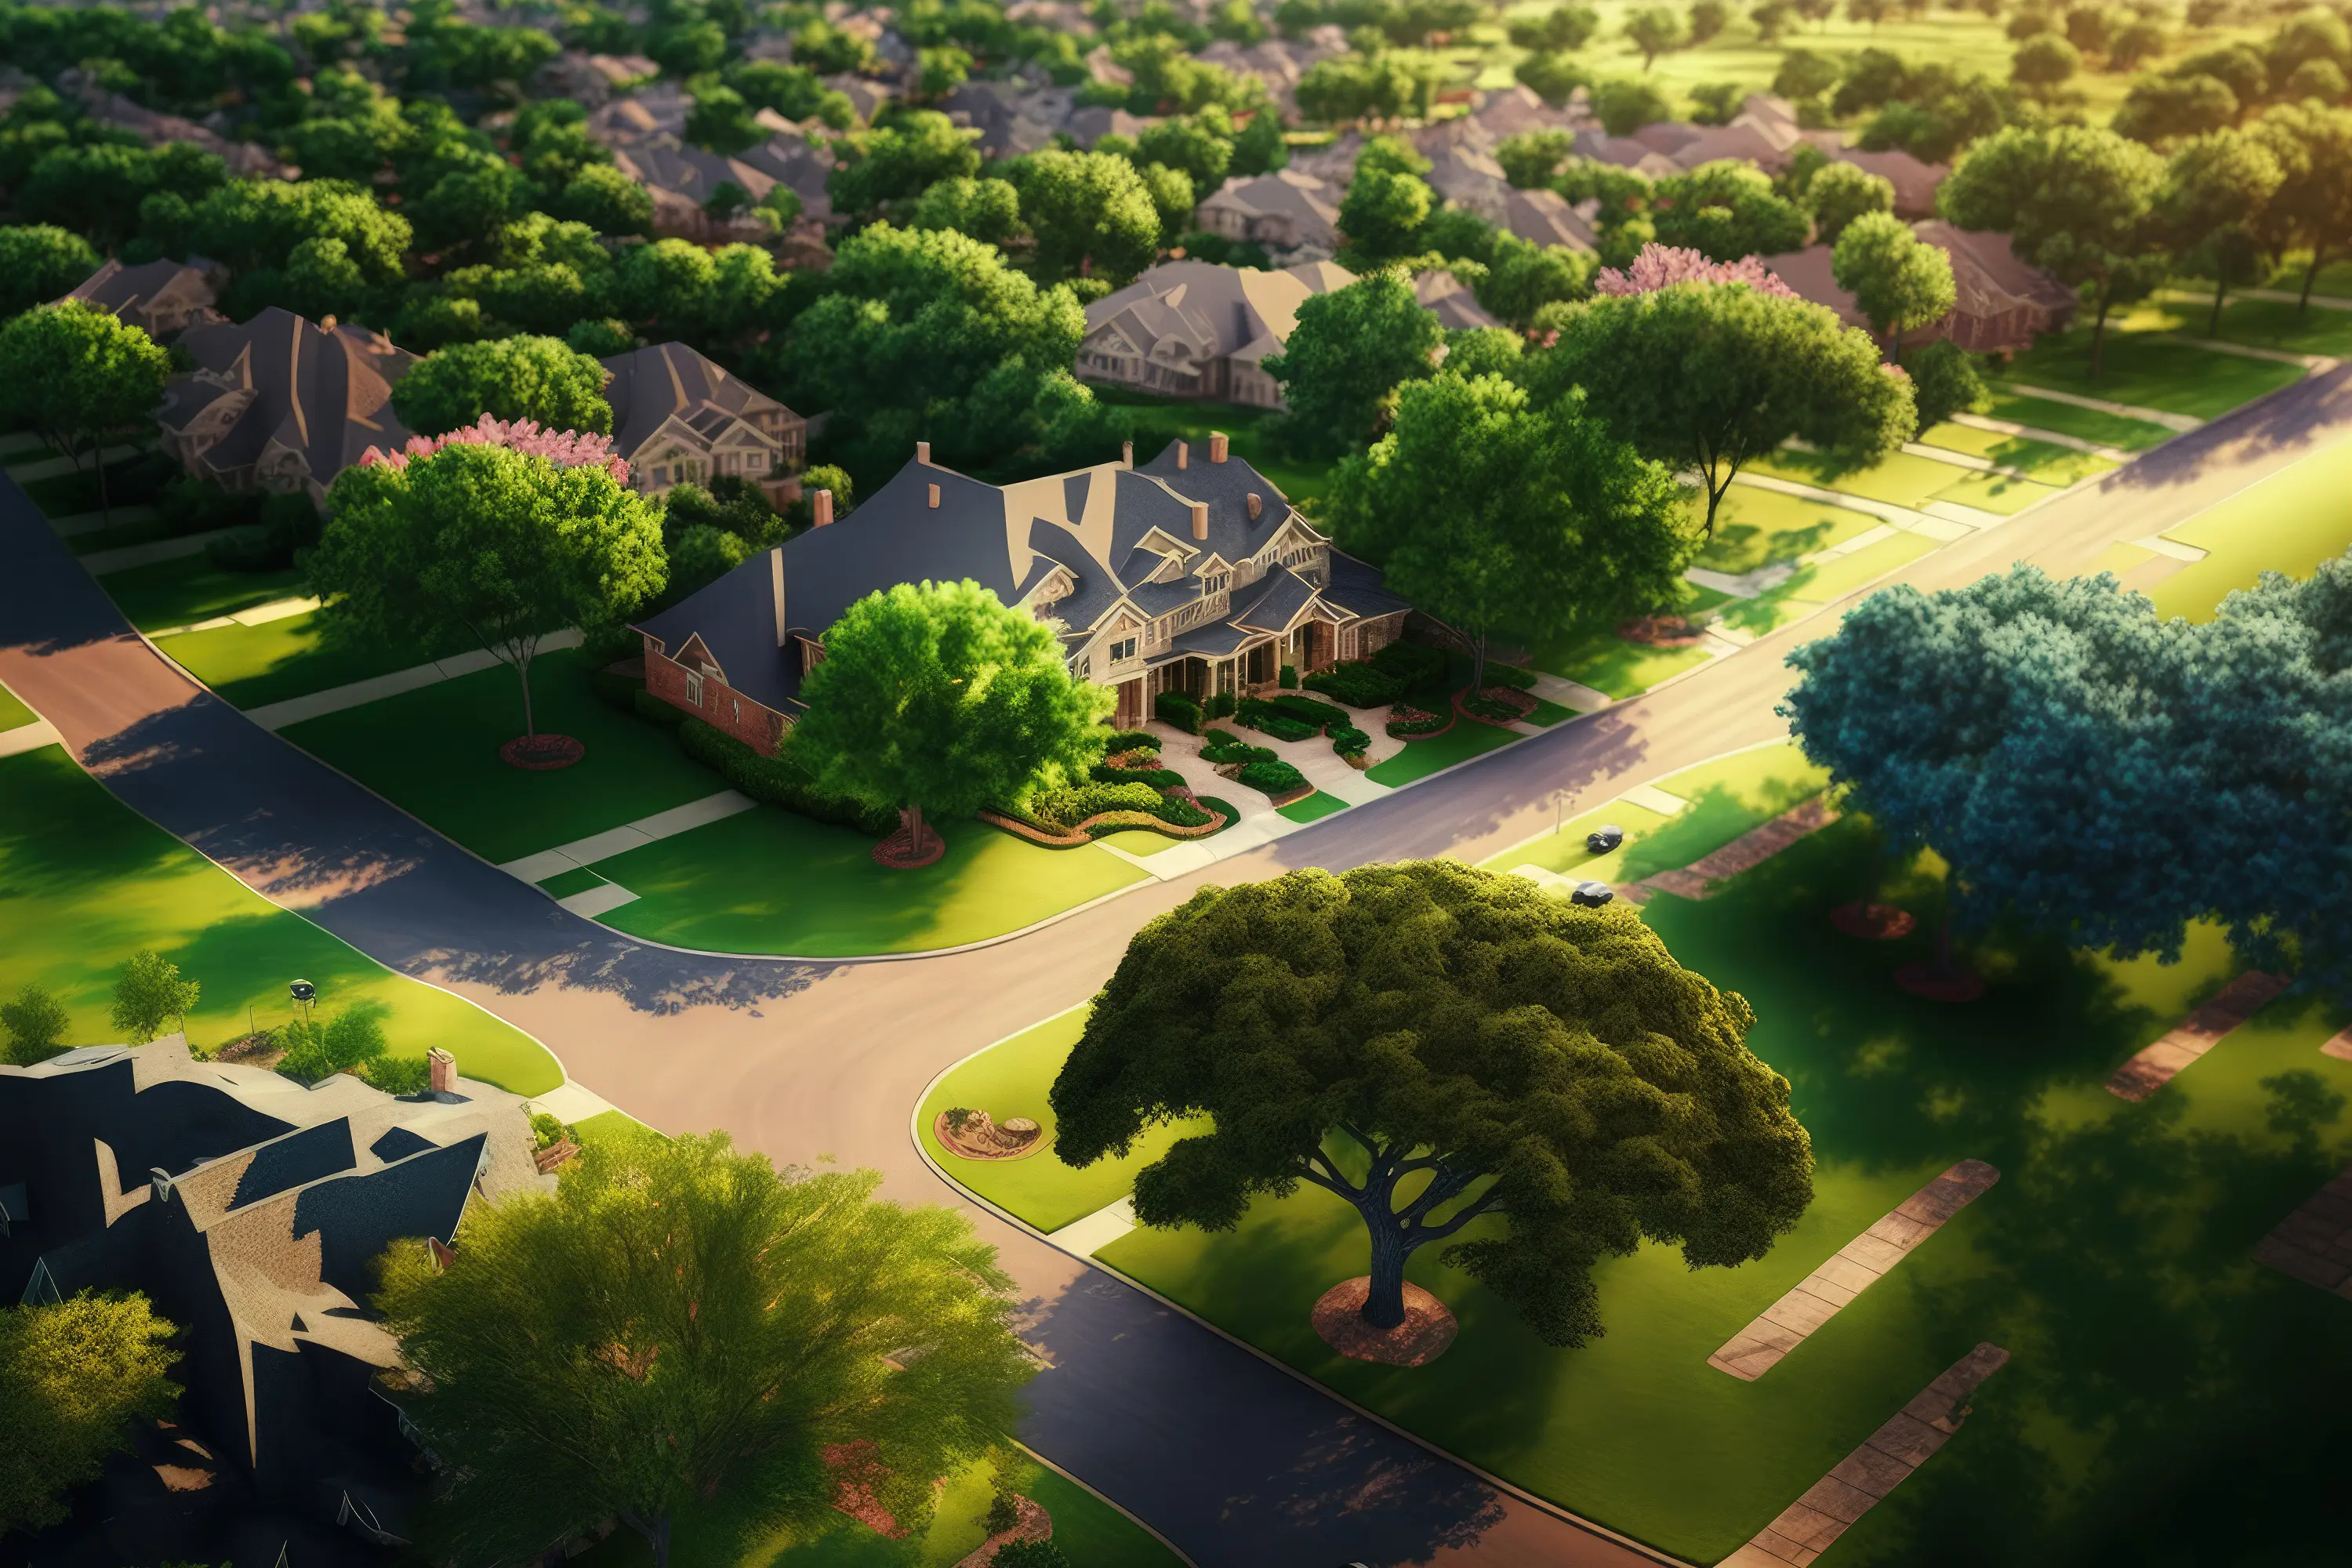 Top 15 Luxury Neighborhoods With Million Dollar Homes in Flower Mound, TX